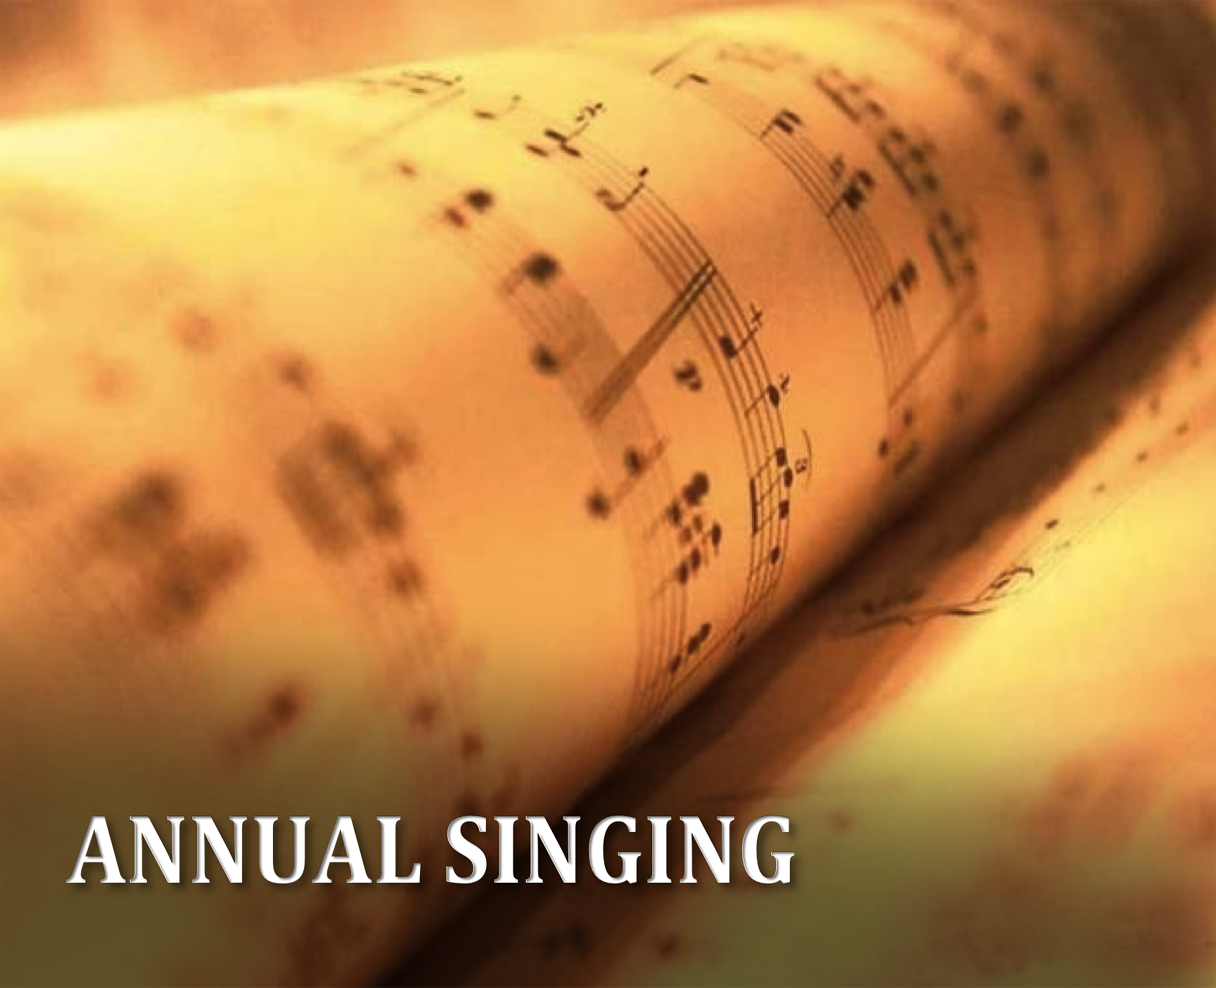 Annual Singing photo.